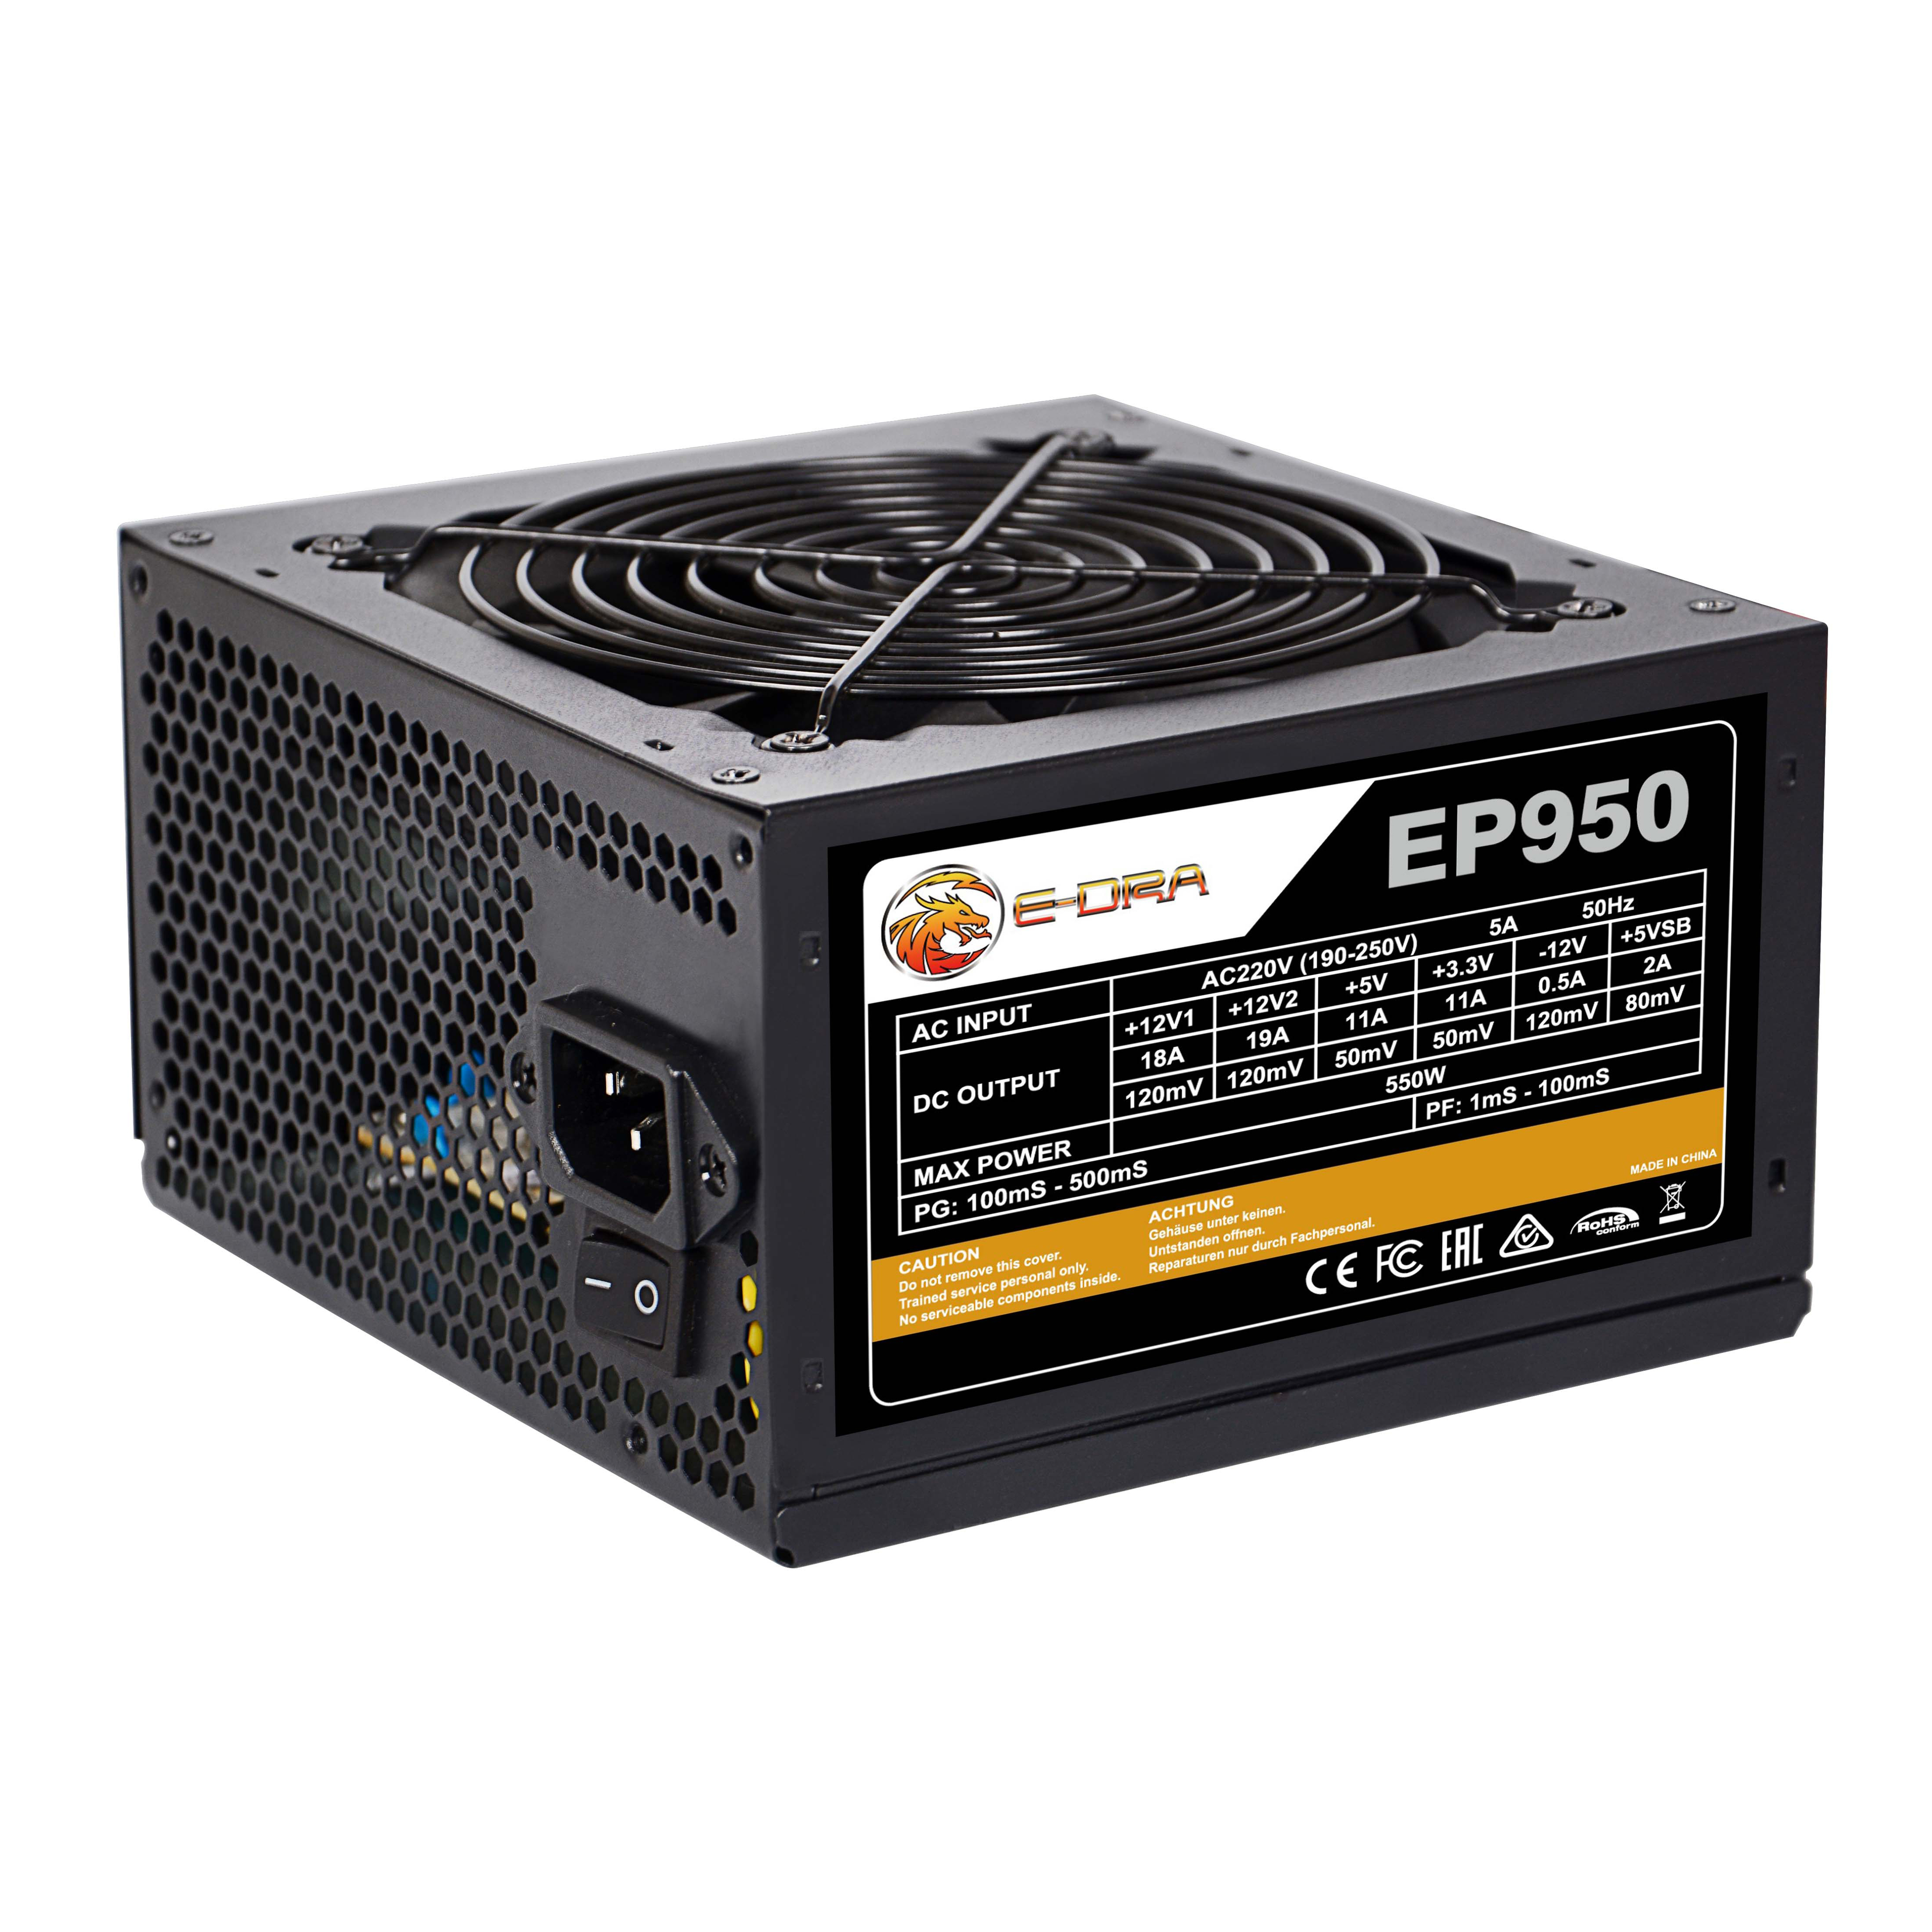 Nguồn - Power Supply E-Dra EP950 550W